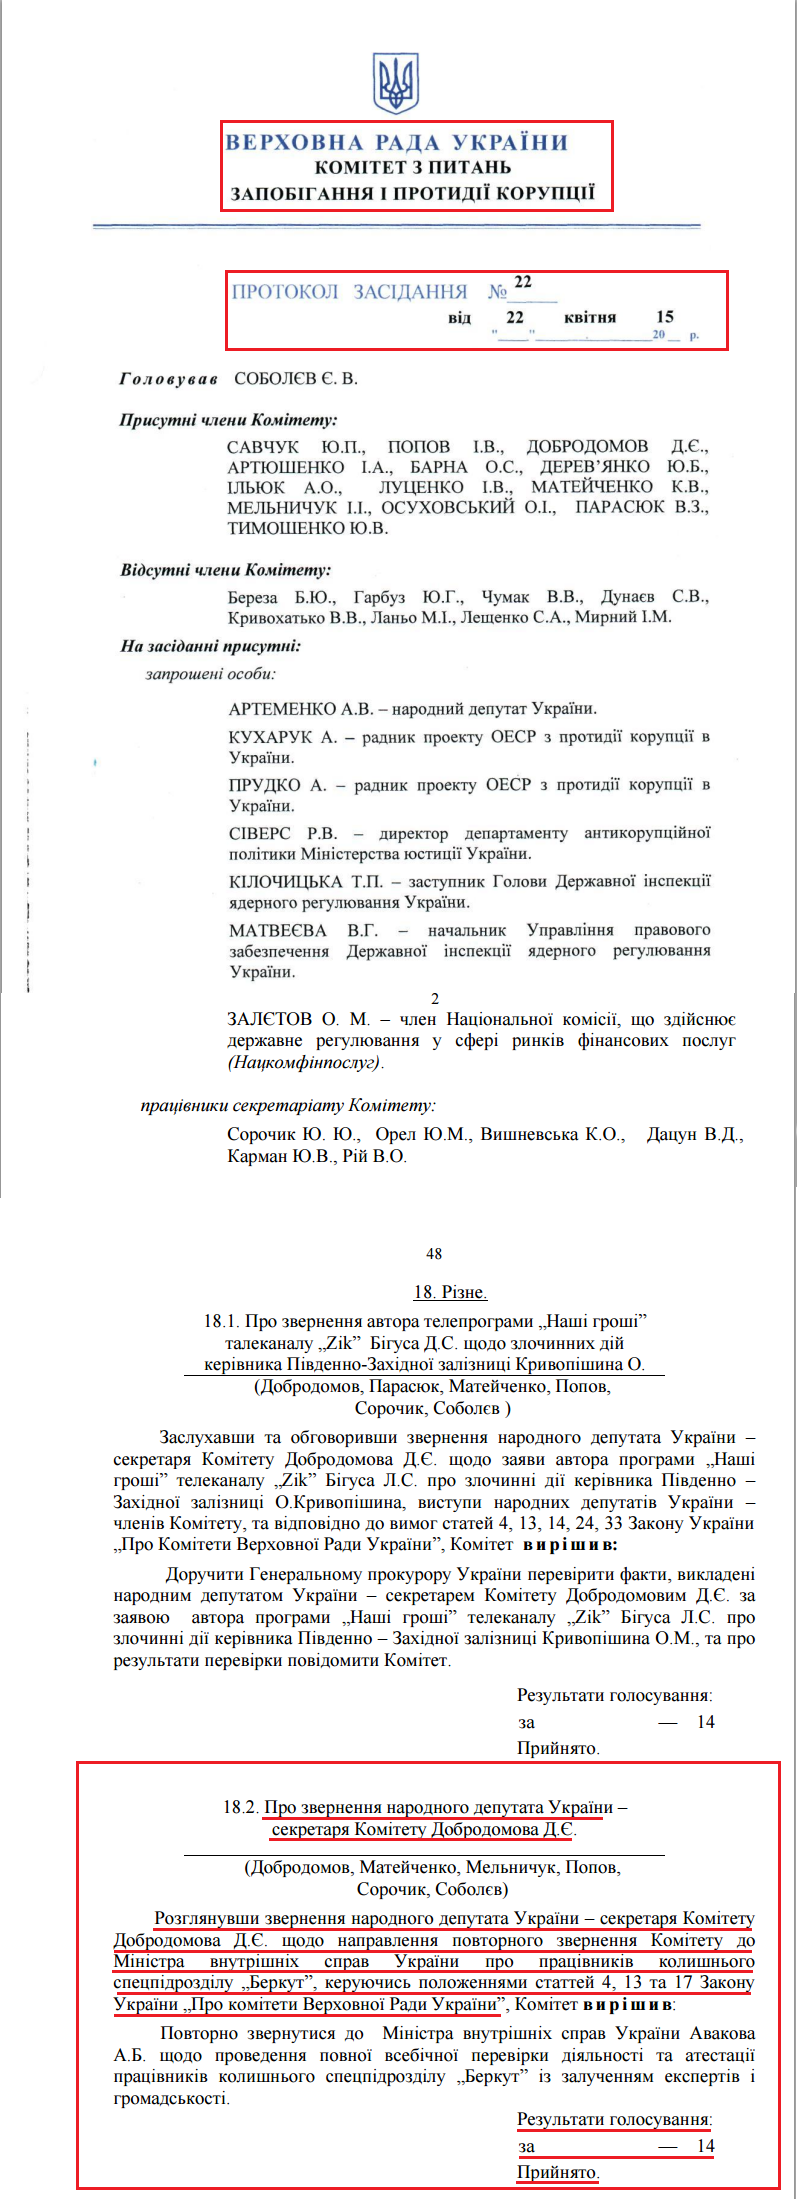 http://crimecor.rada.gov.ua/komzloch/doccatalog/document?id=55304